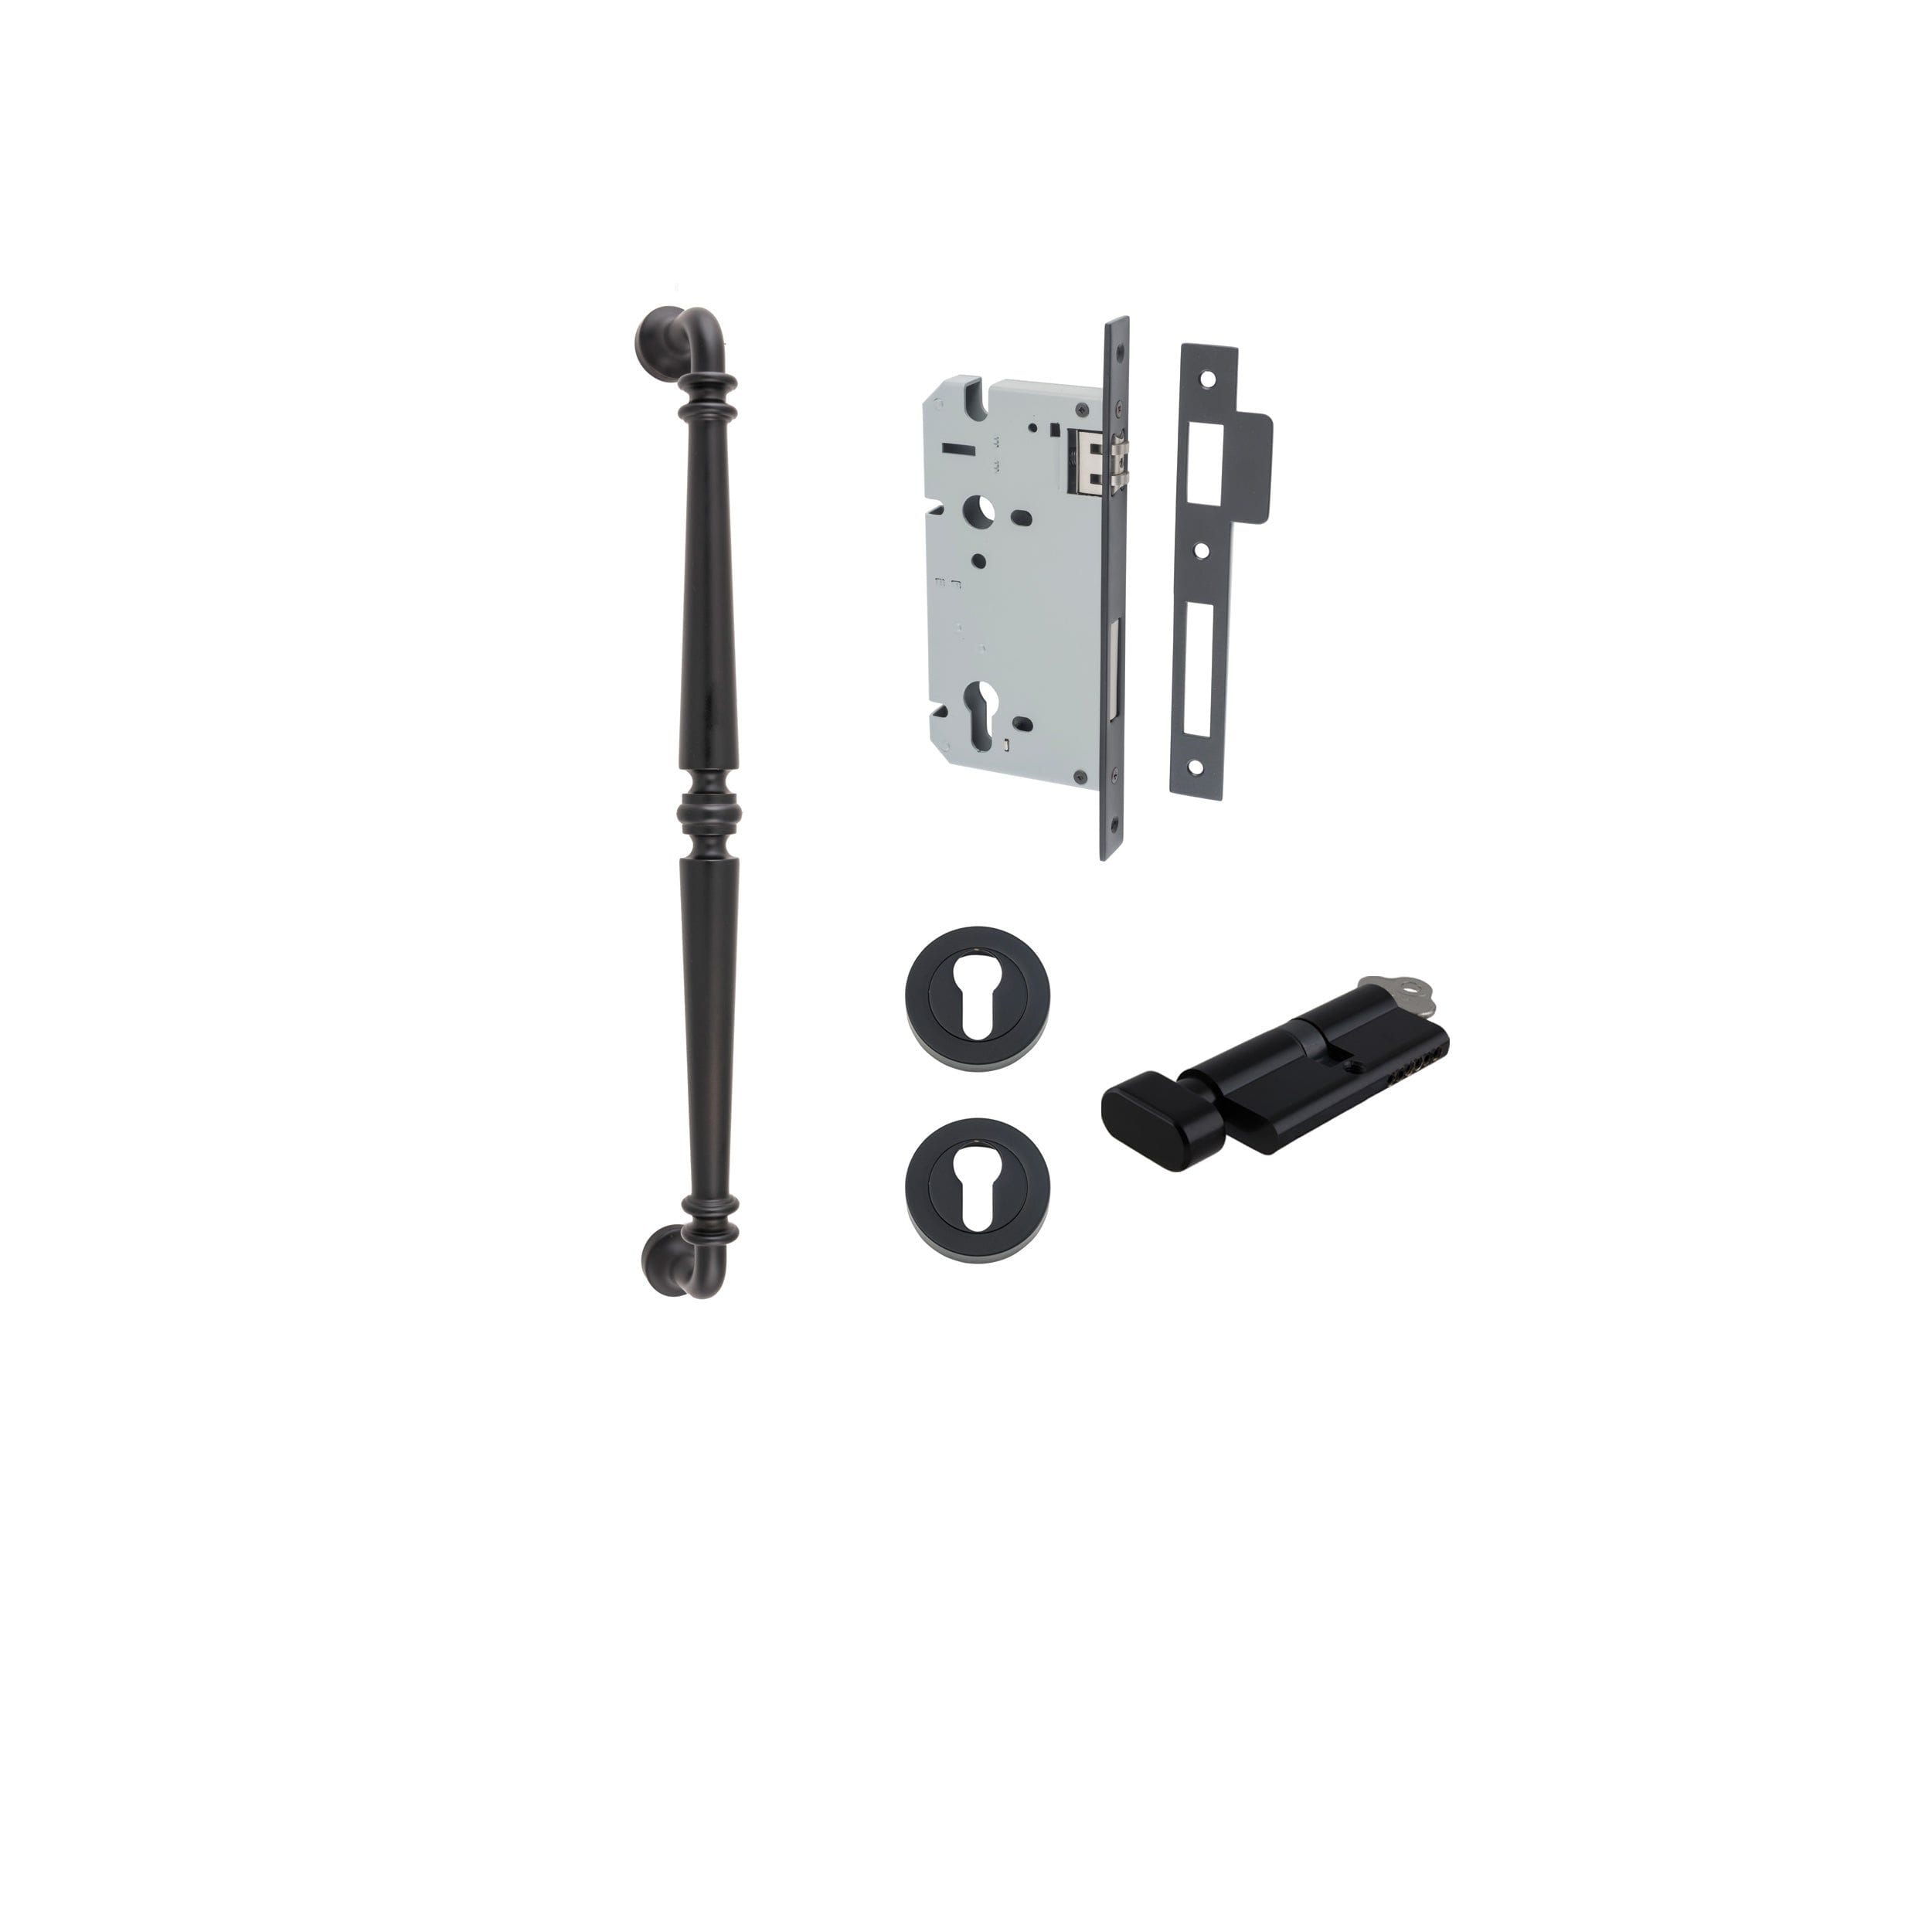 Sarlat Pull Handle Matt Black 450mm Entrance Kit - Key/Thumb Turn